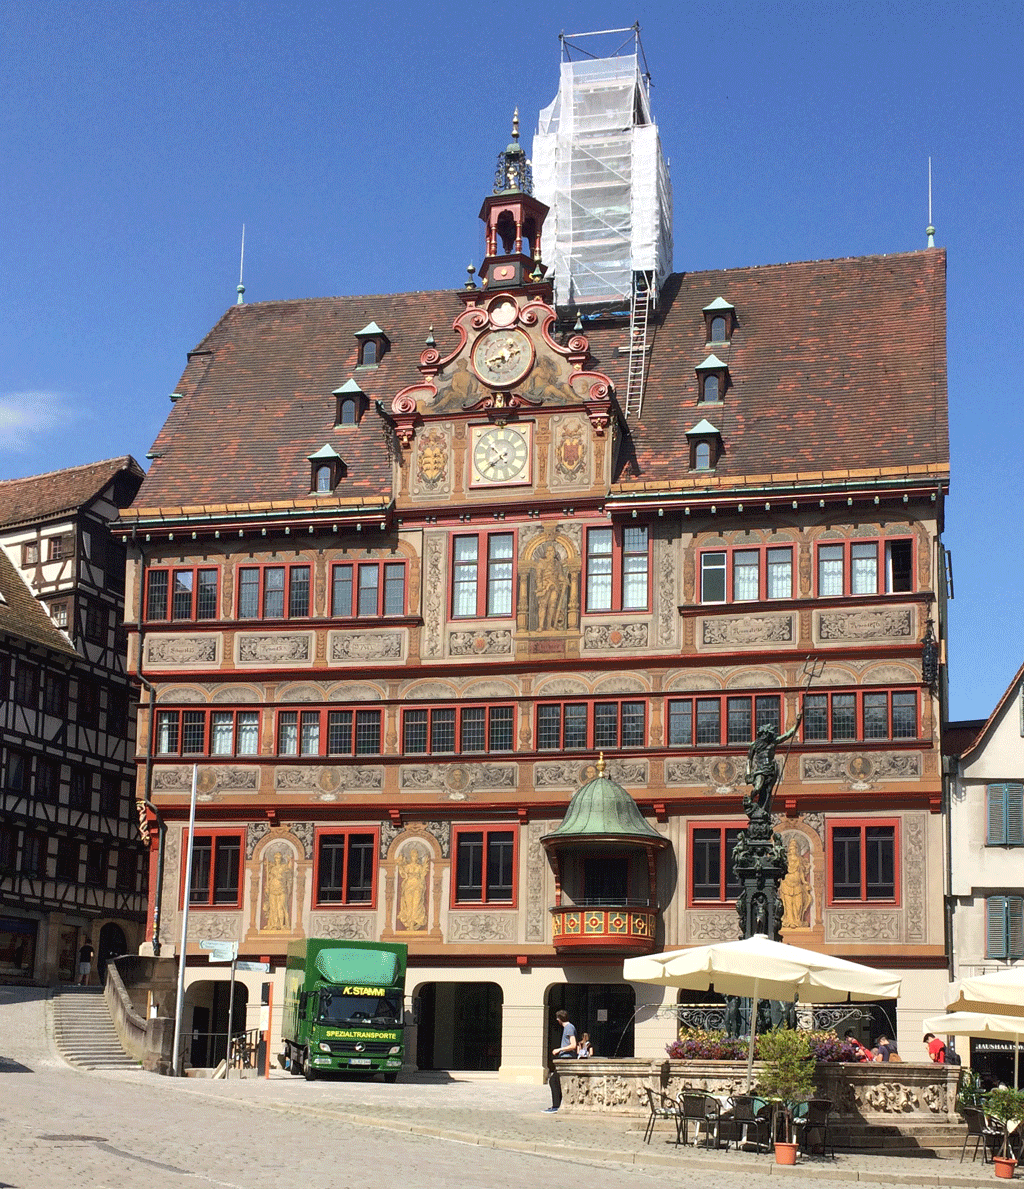 The beautifully painted rathaus in Tübingen